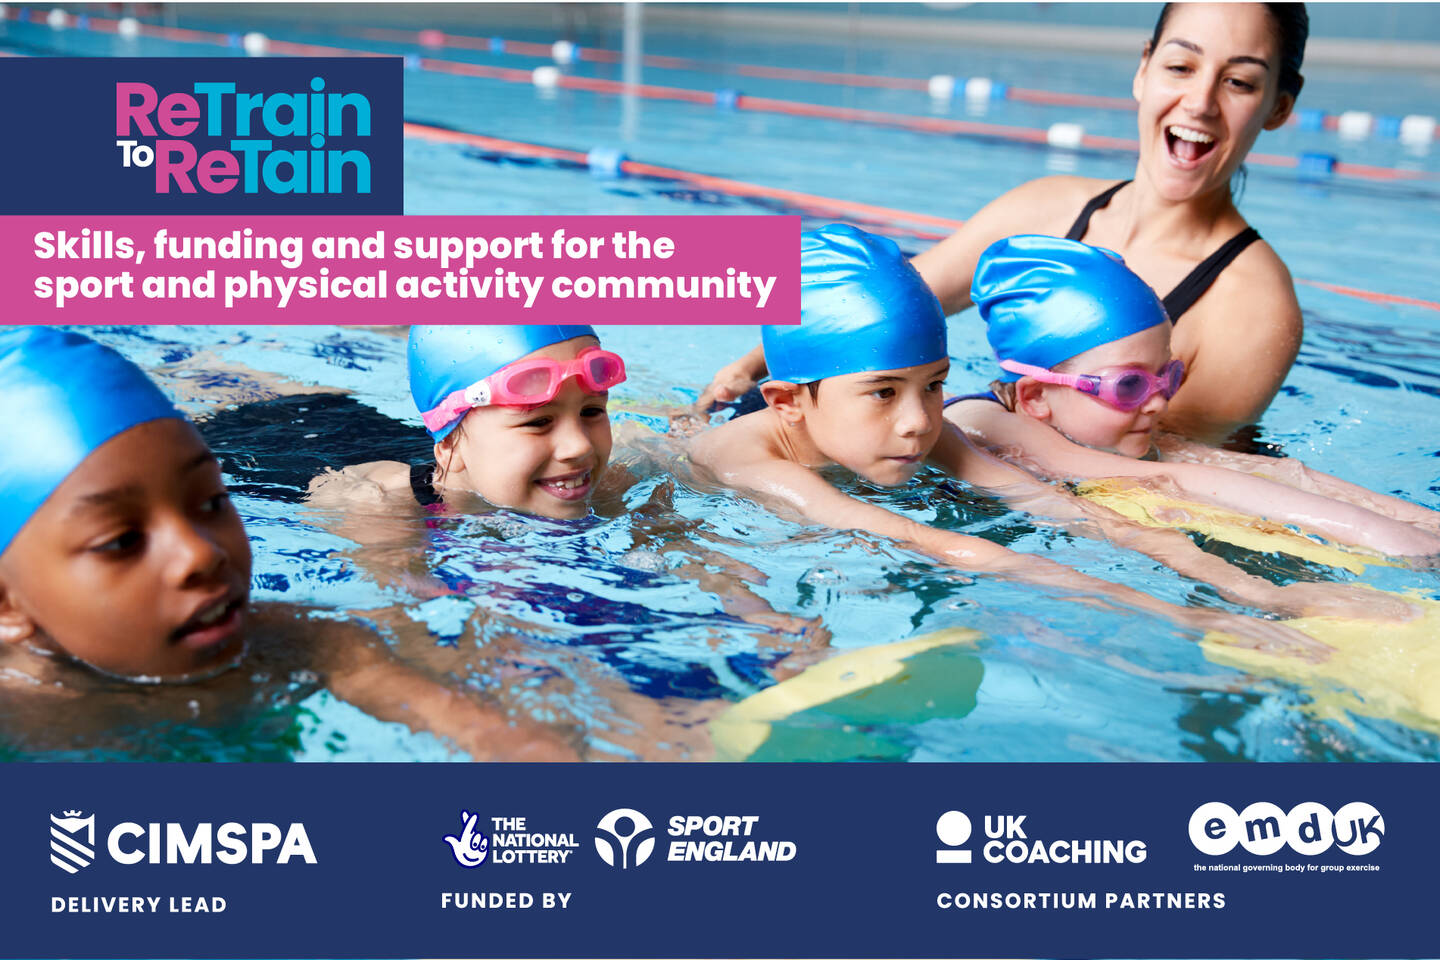 Promotional image advertising the ReTrain to Retain programme by UK Coaching, CIMSPA and EMD UK.